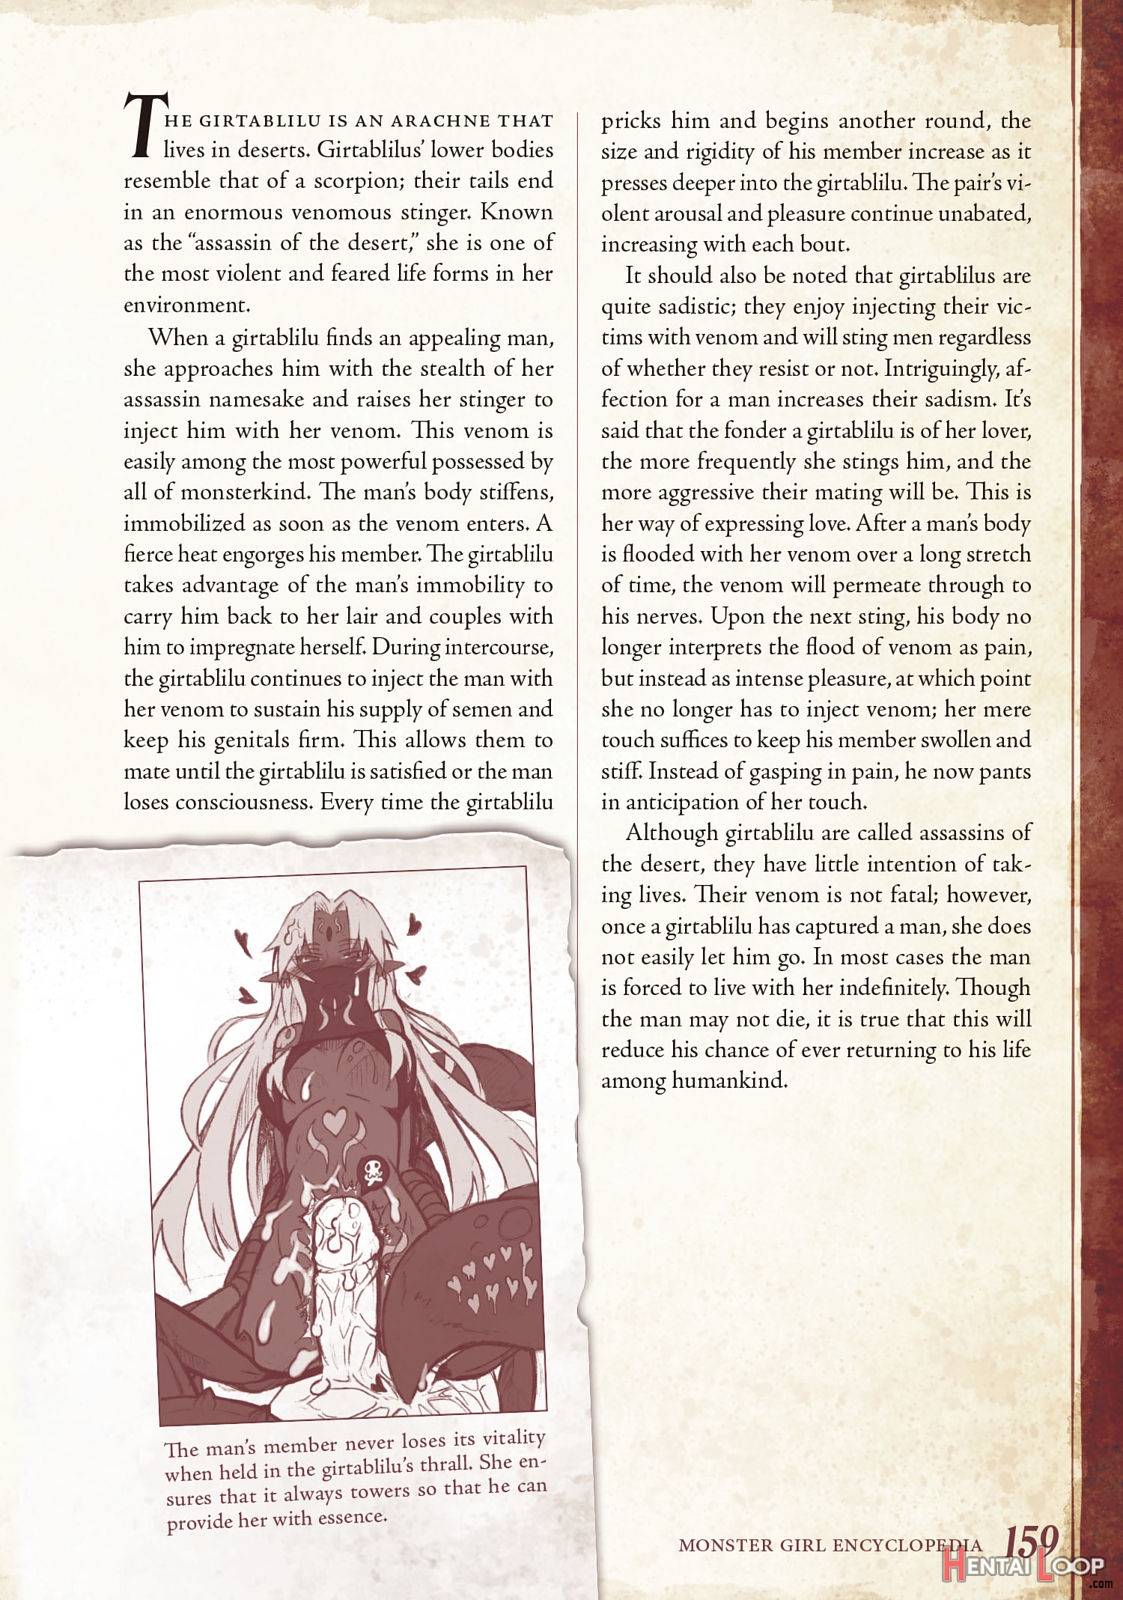 Monster Girl Encyclopedia Vol. 1 page 160